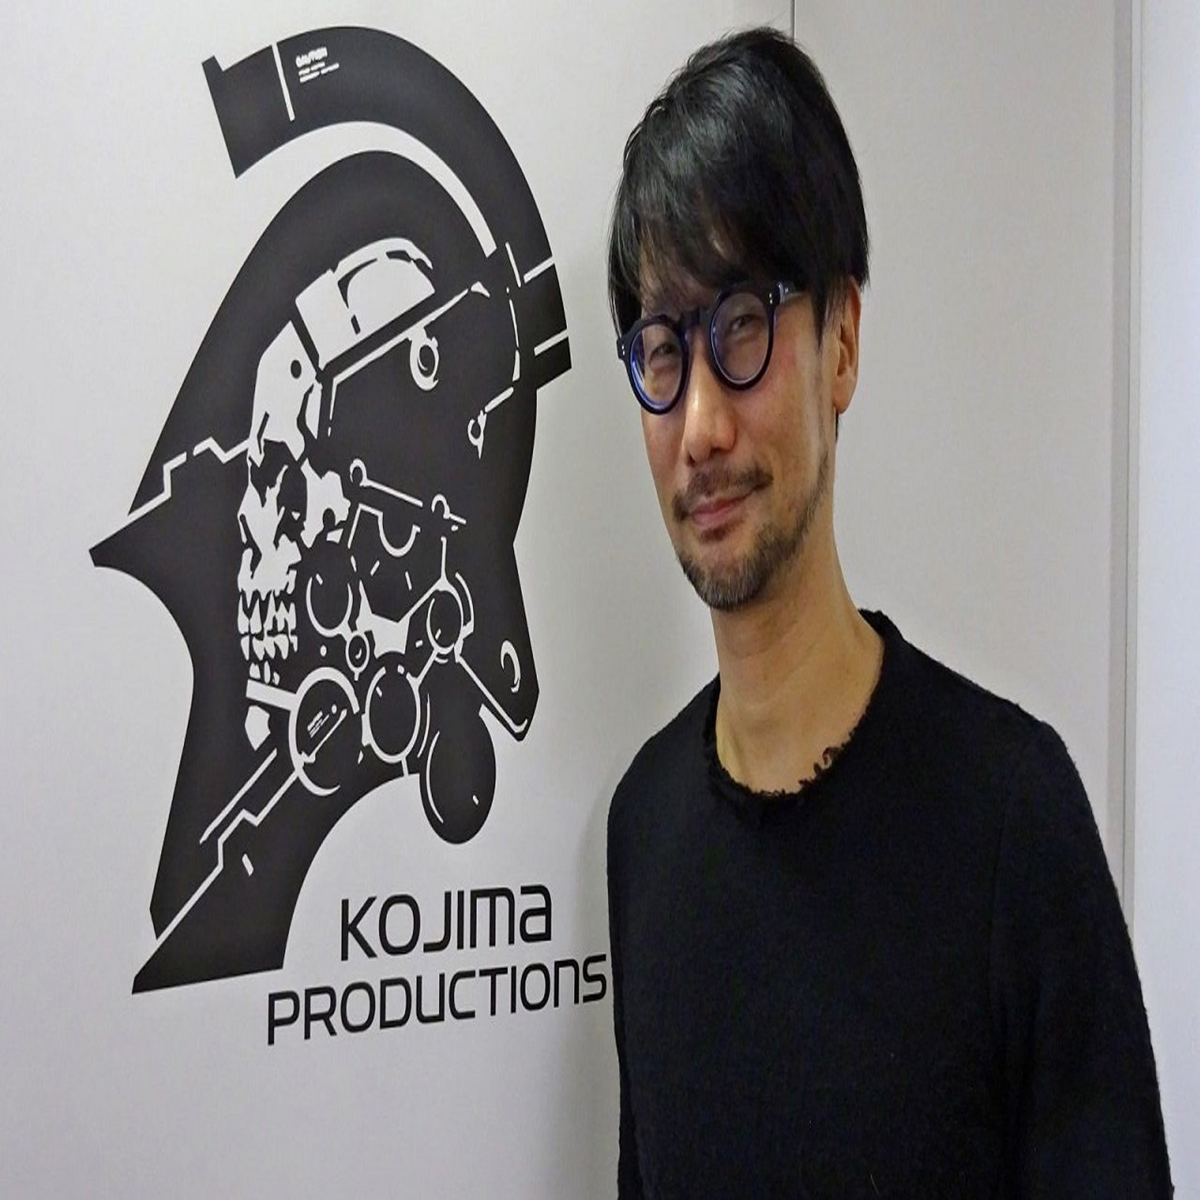 Selenology — Hideo Kojima seems to have really enjoyed Coco!